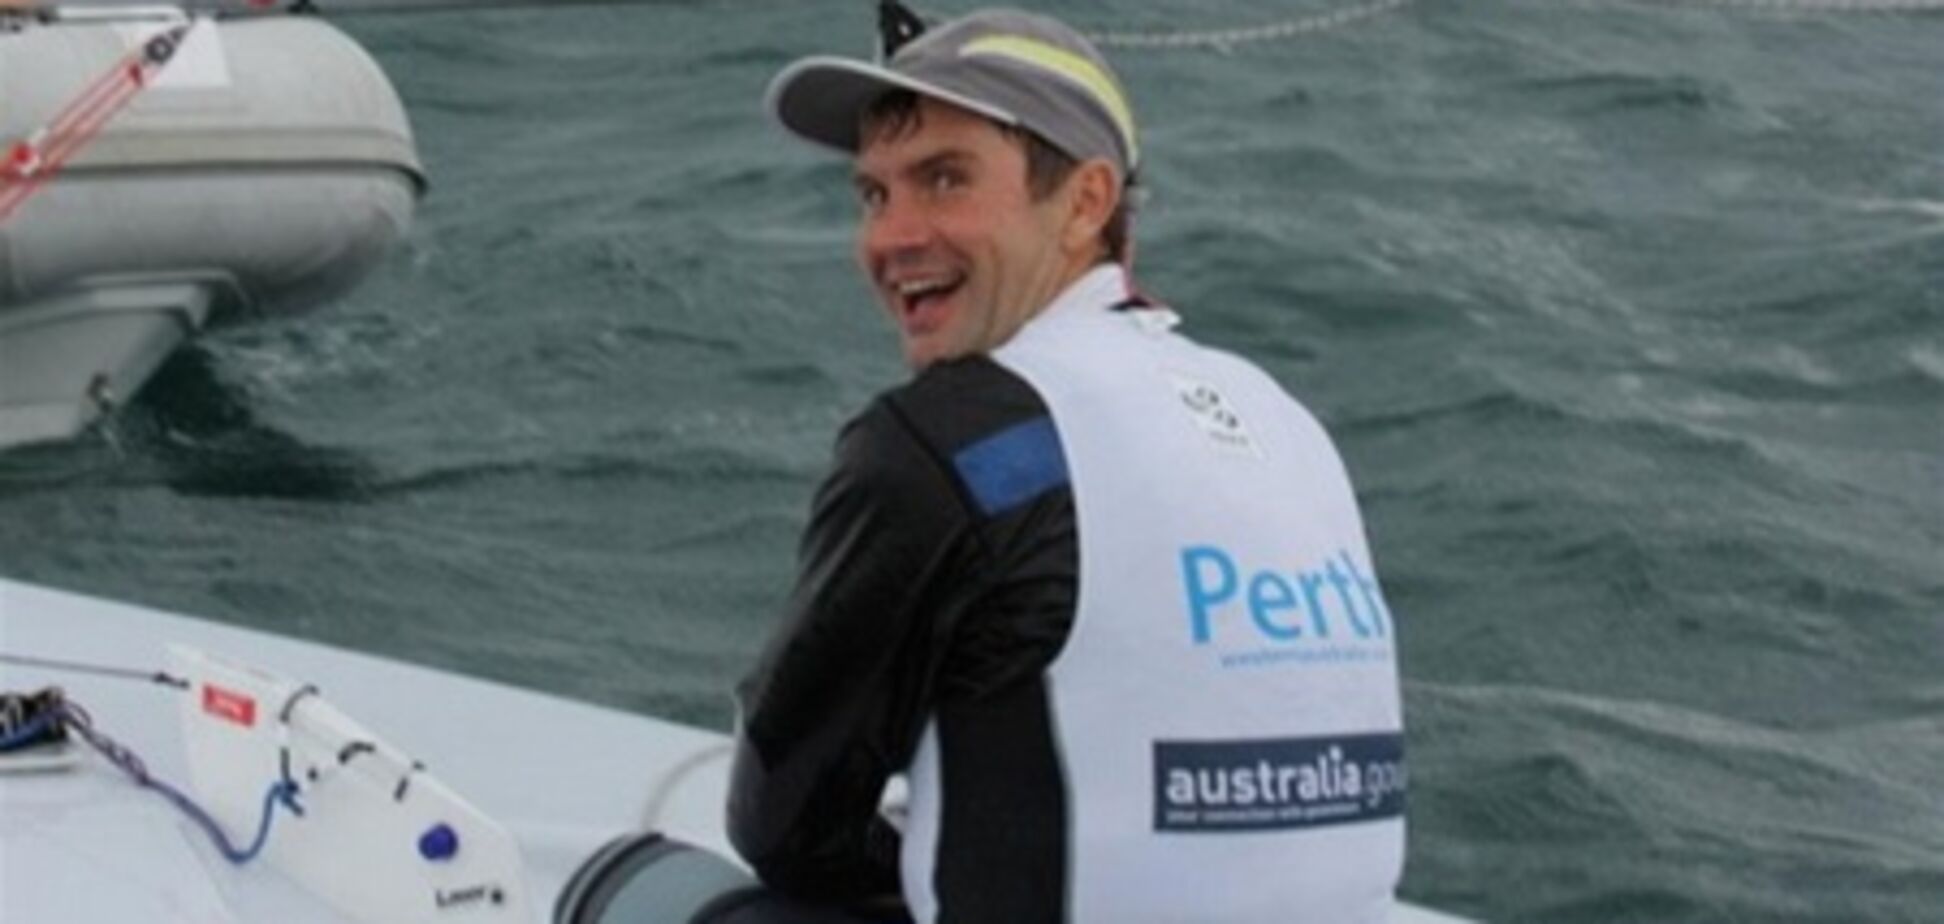 Австралиец — олимпийский чемпион в классе 'Лазер' по парусному спорту